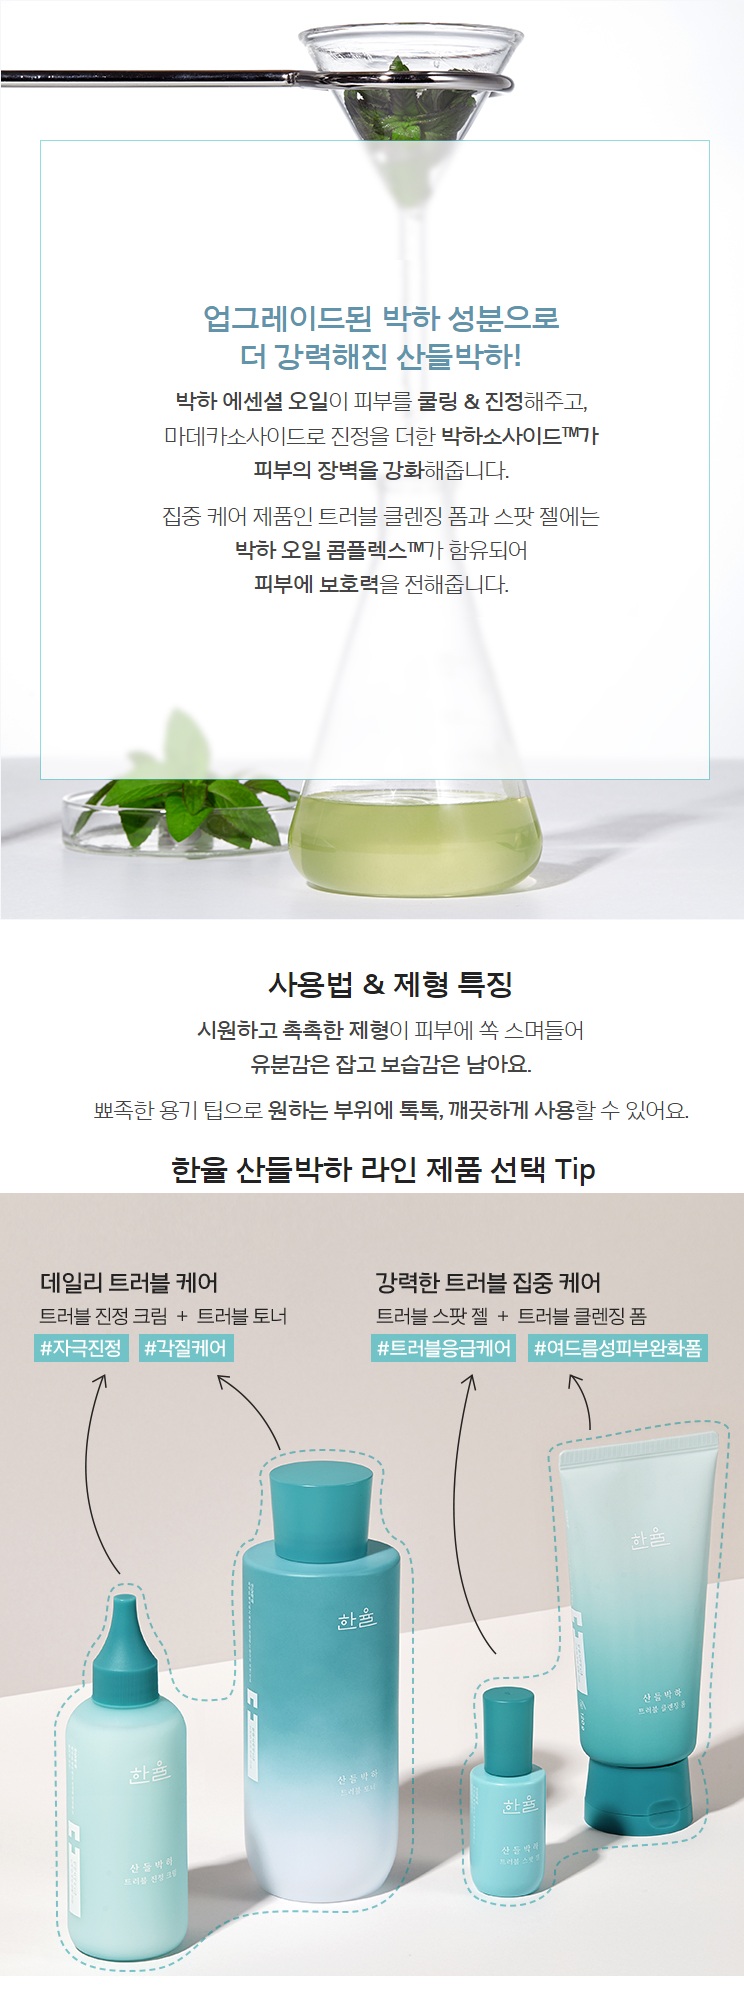 Hanyul Mentha Trouble Cream korean skincare product online shop malaysia china macau2